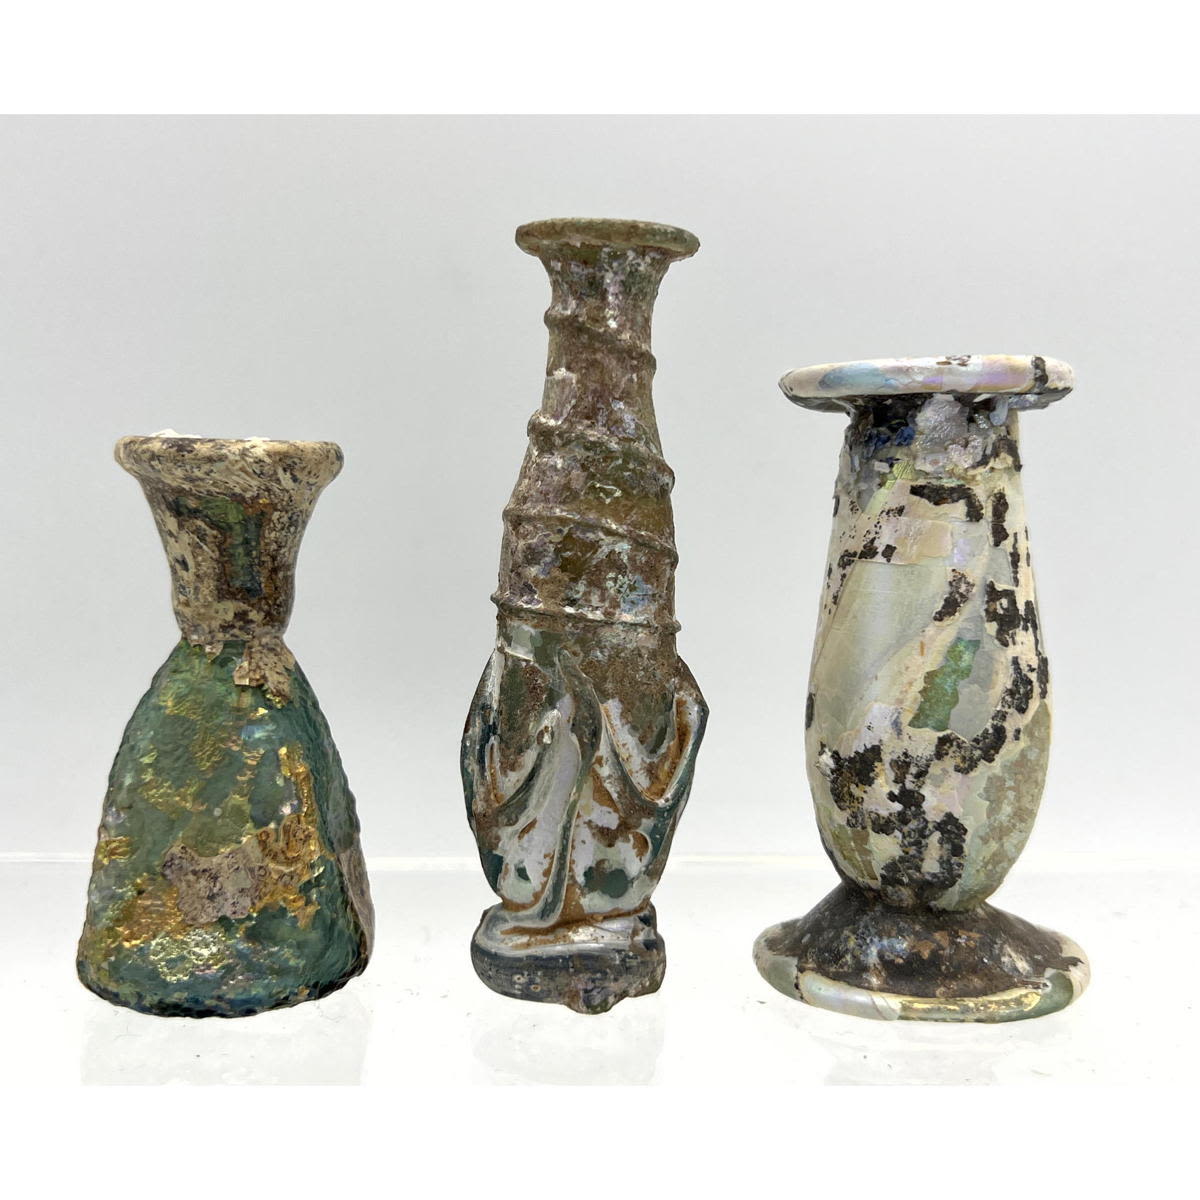 3pc Ancient Roman glass miniature